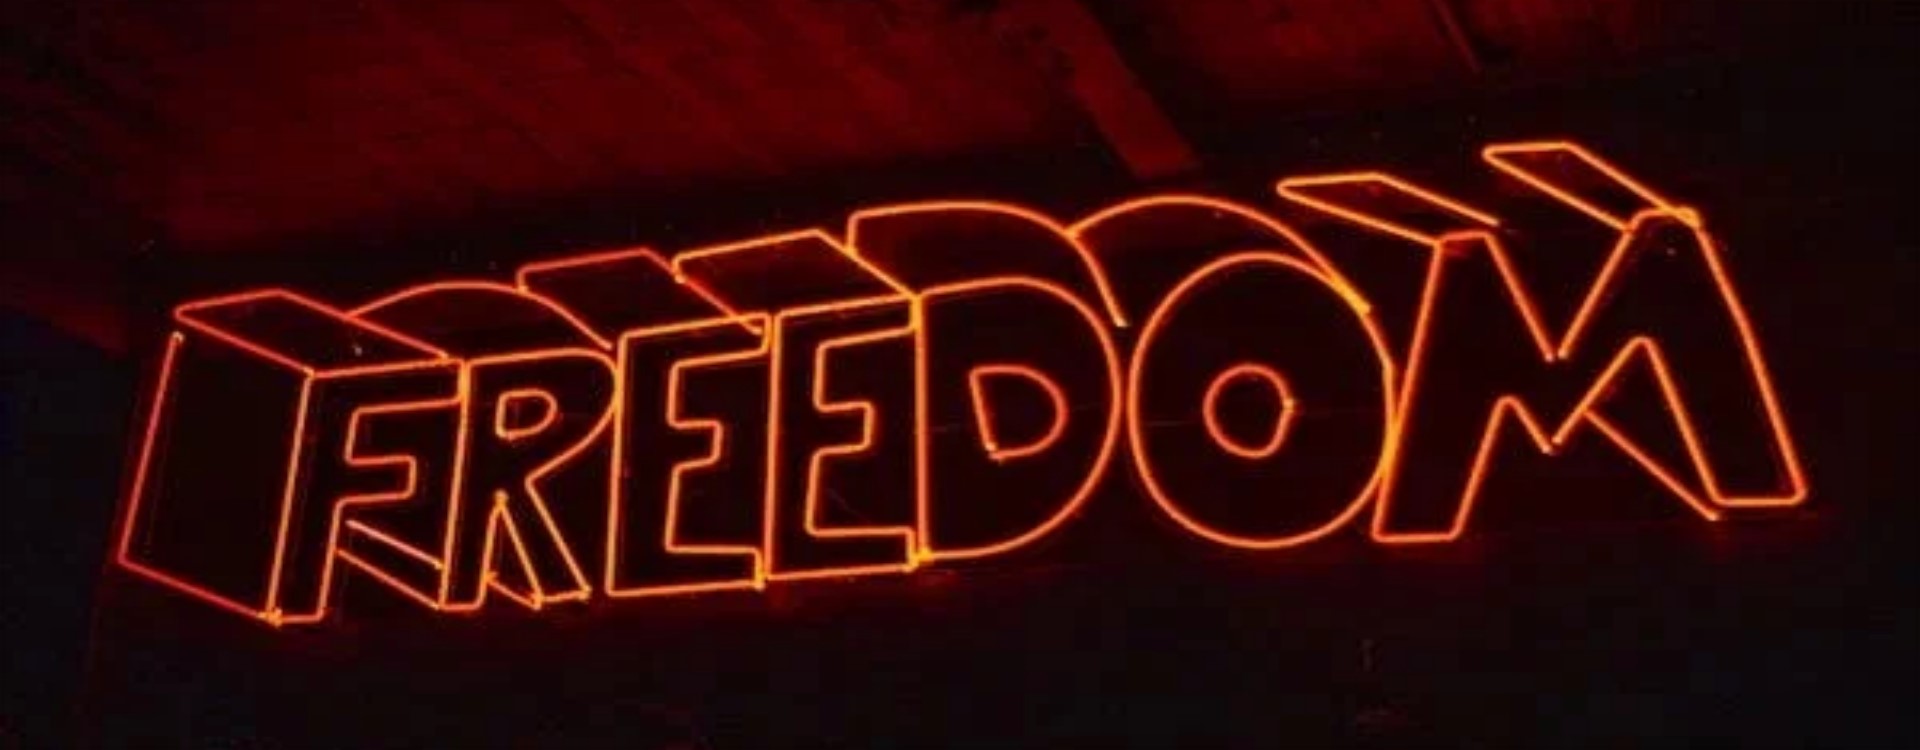 Jack’s Freedom Bar Sign